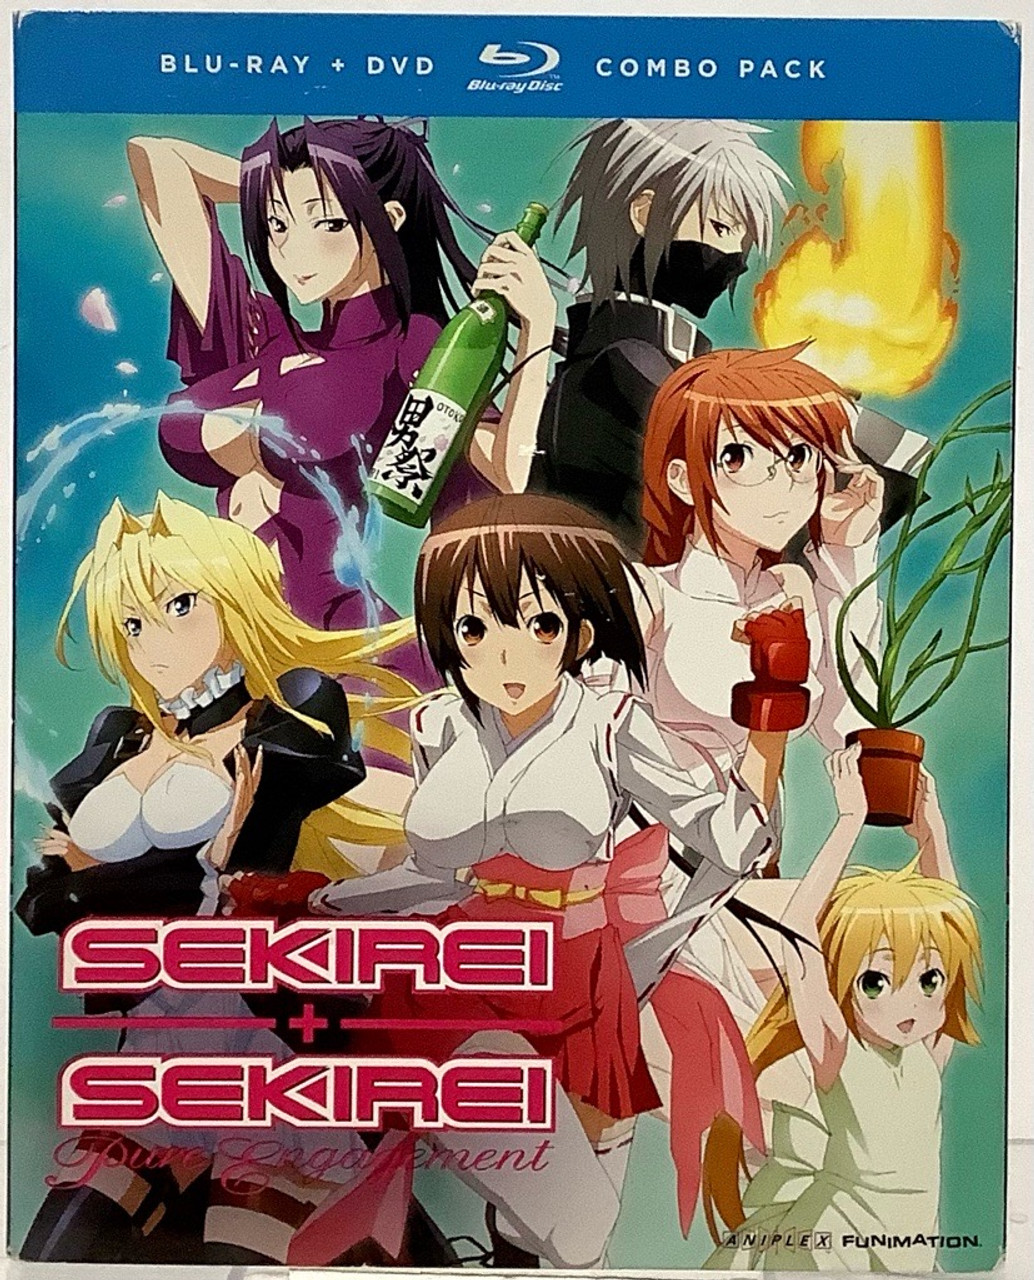 alex woodell recommends Sekirei Anime Season 1